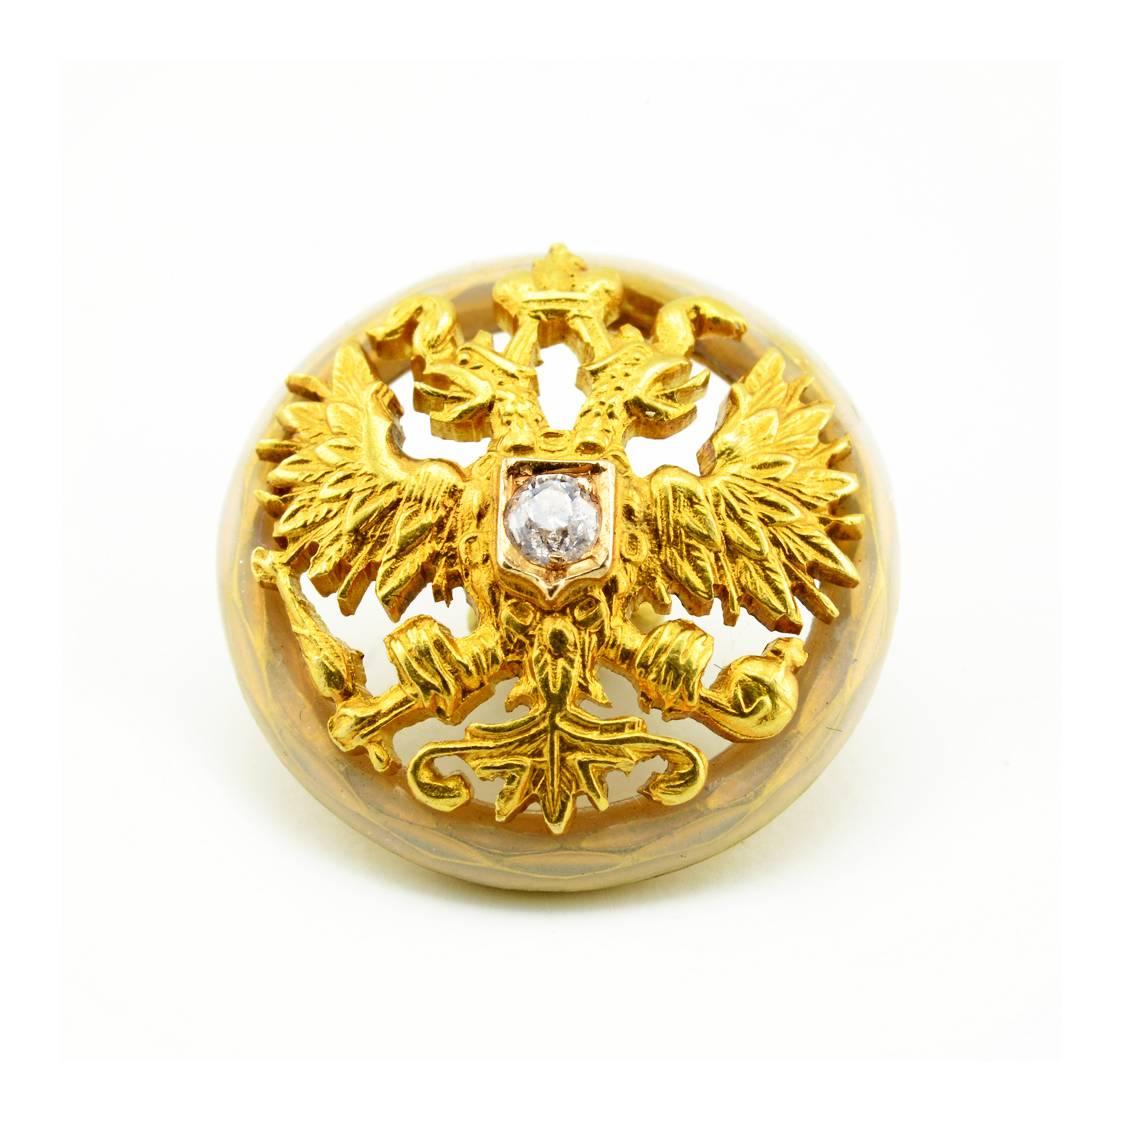 Edwardian Pair of Antique Gold, Diamond and Guilloché Enamel Fabergé Imperial Cufflinks